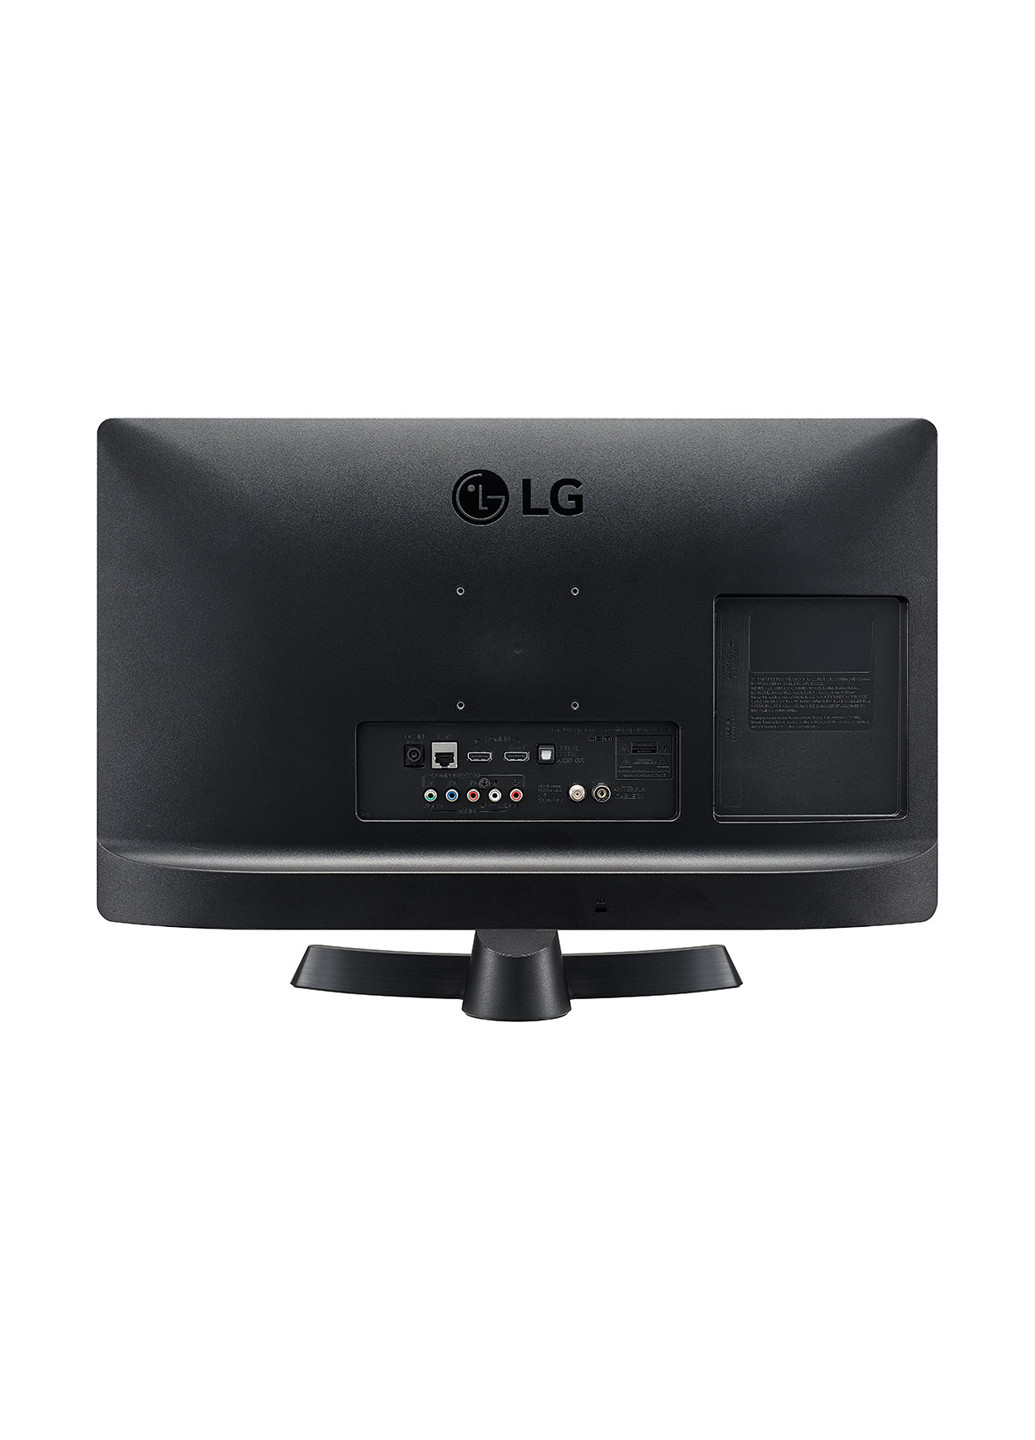 Телевизор LG 28tl510s-pz (141857769)